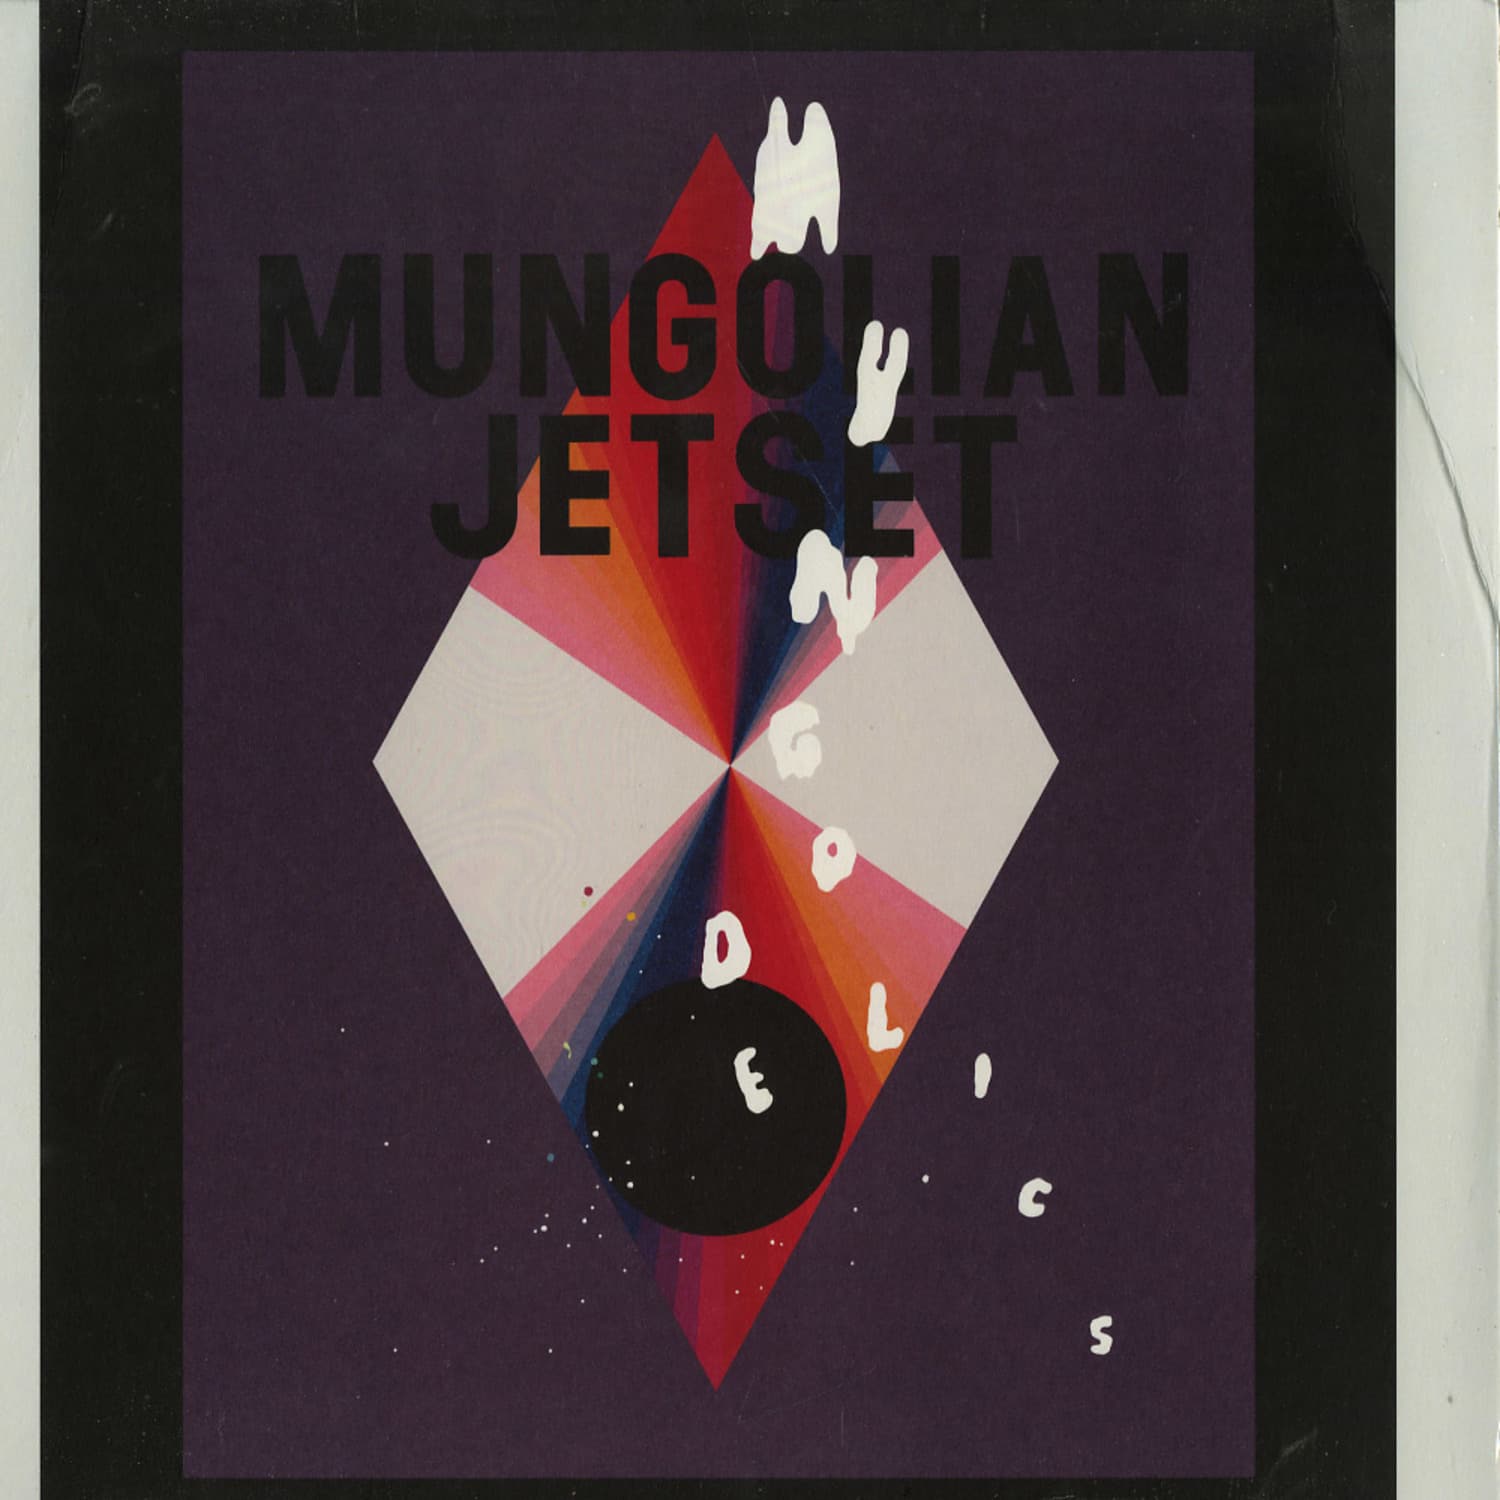 Mungolian Jetset - MUNGODELICS 